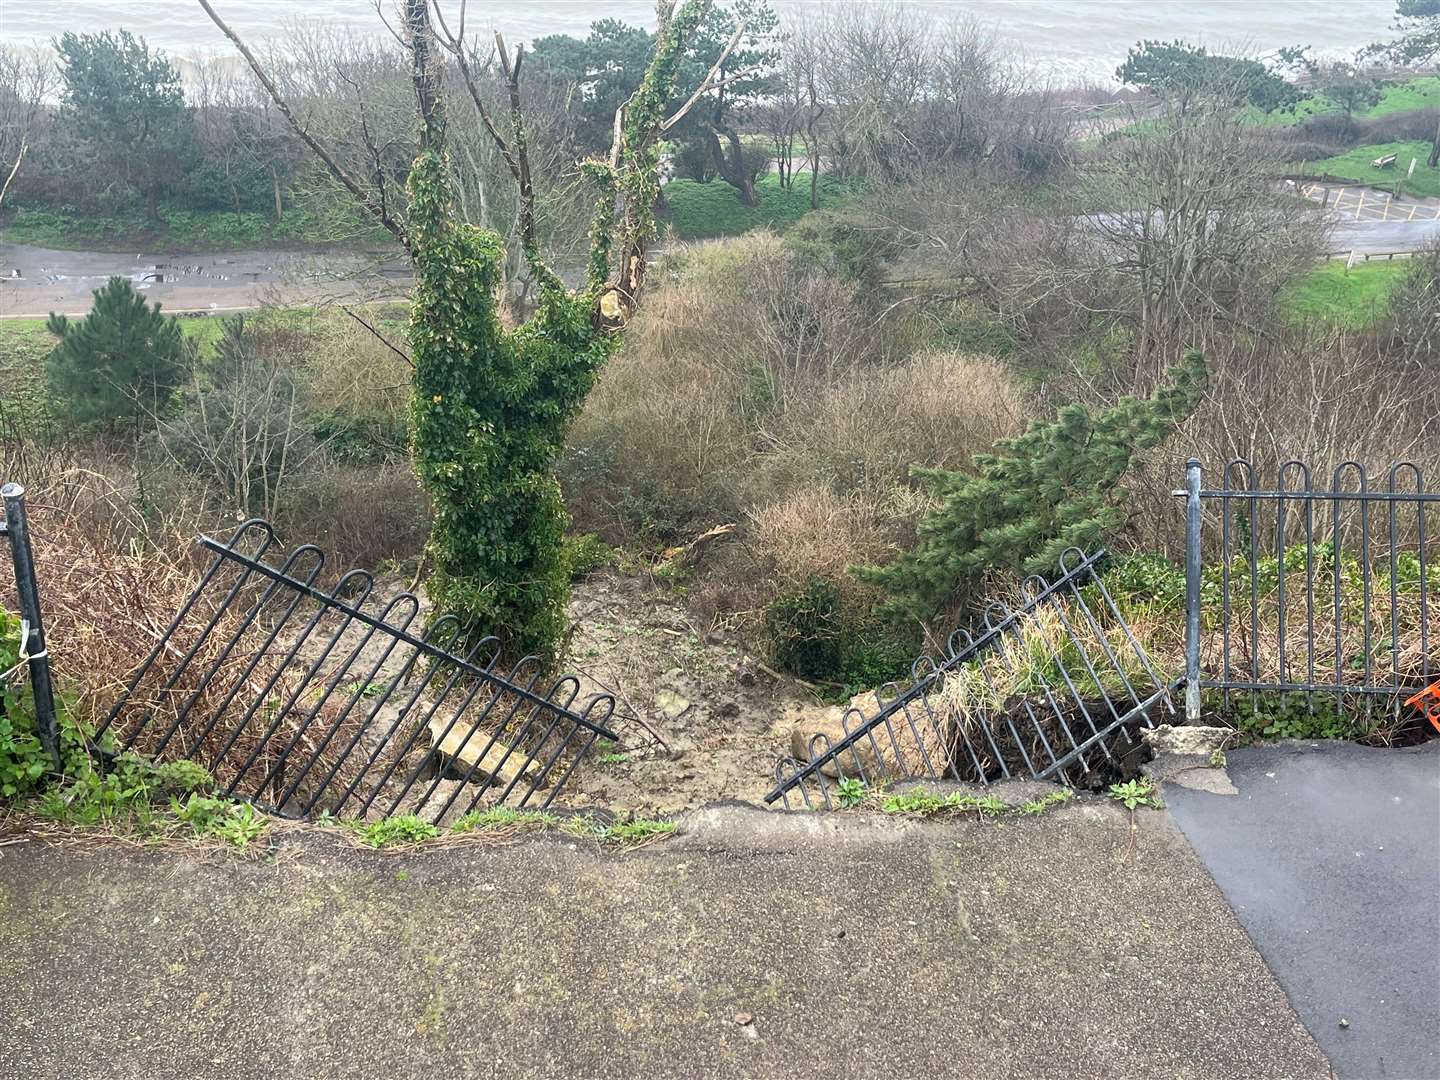 A landslide on January 24 damaged railings on Madeira Walk, along The Leas in Folkestone